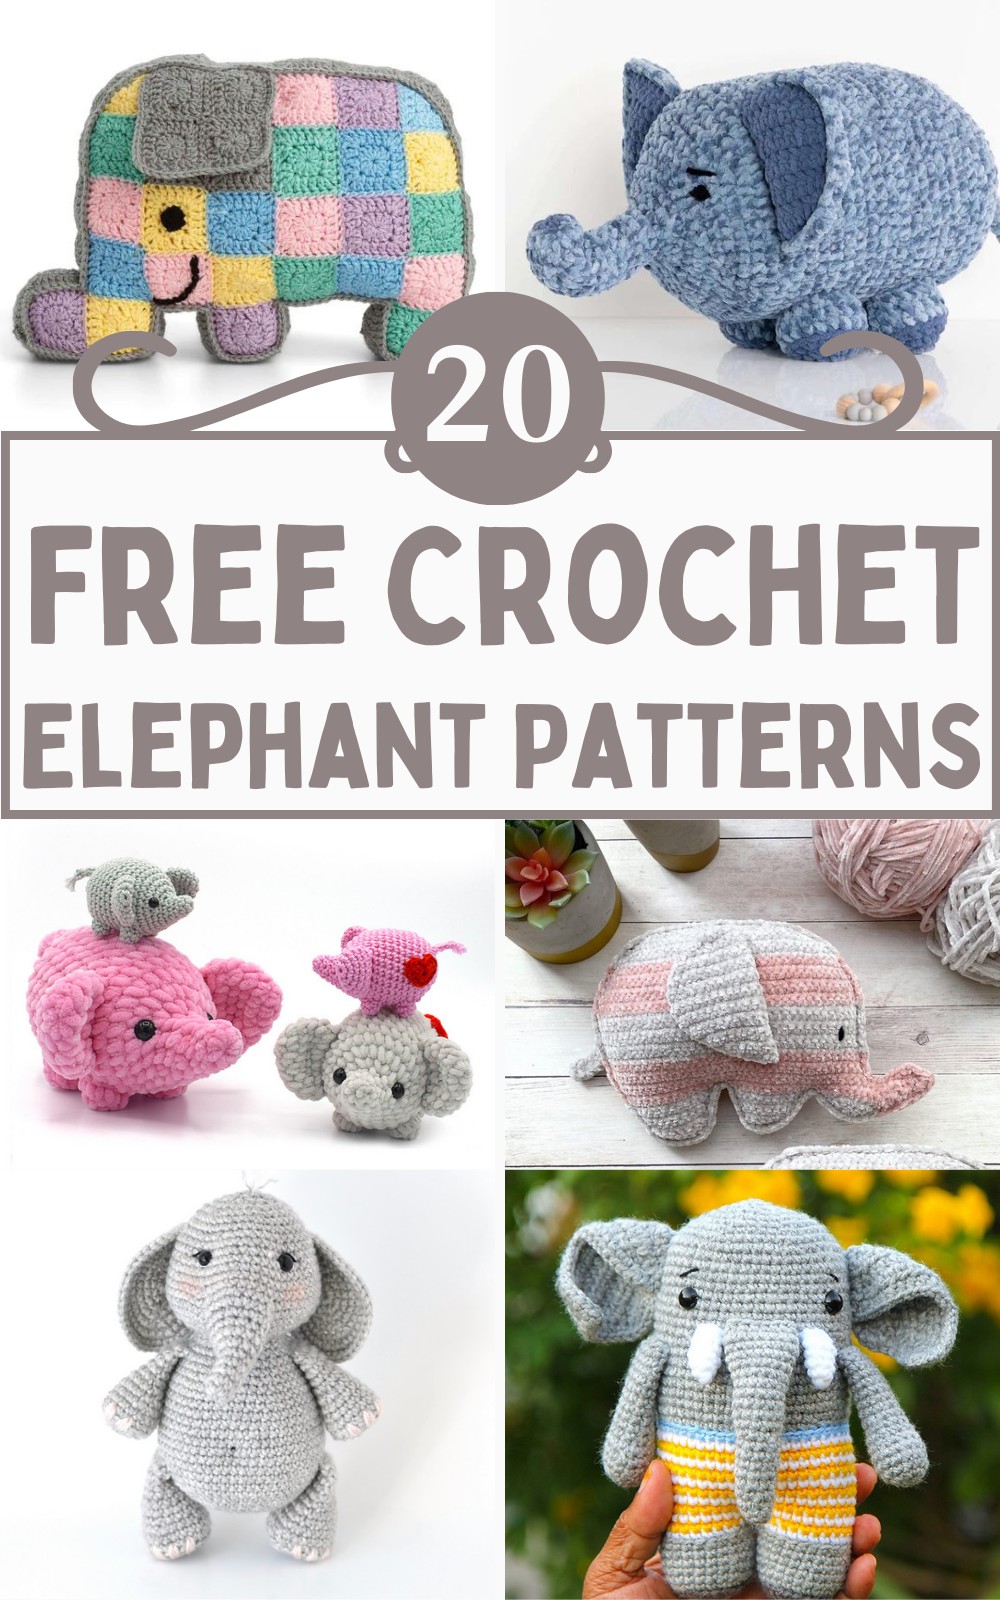 5 Free Crochet Elephant Patterns